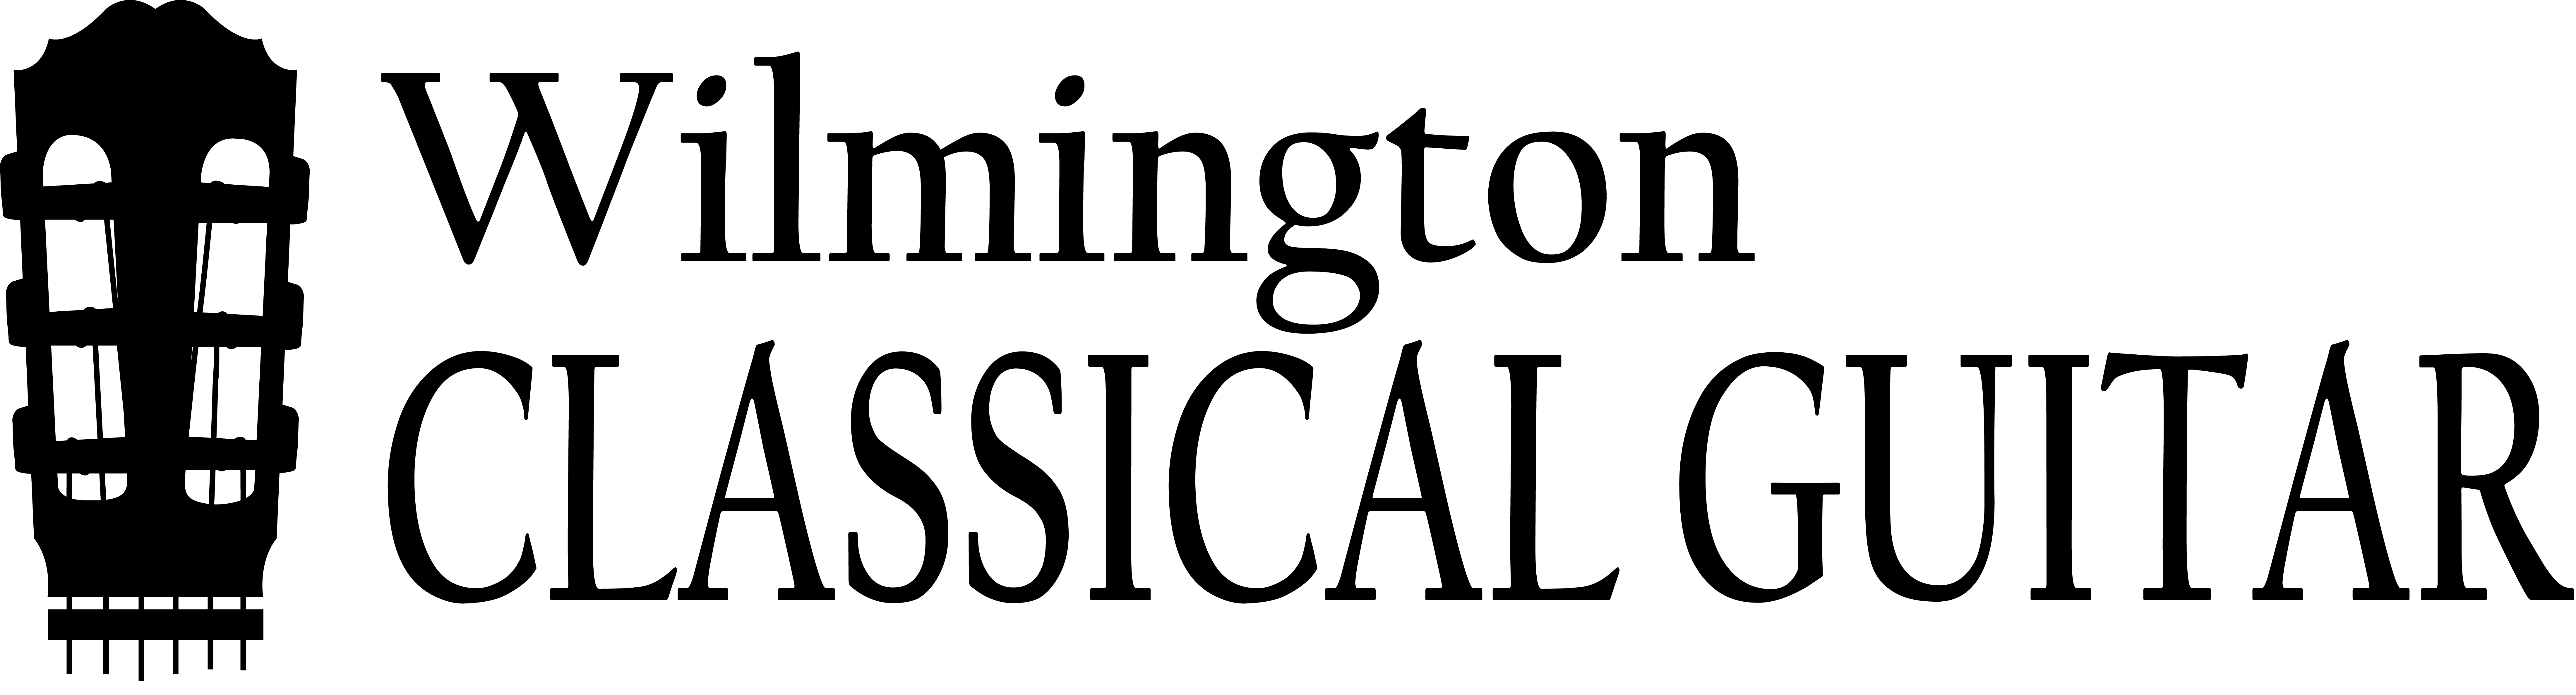 Wilmington Classical Guitar Logo